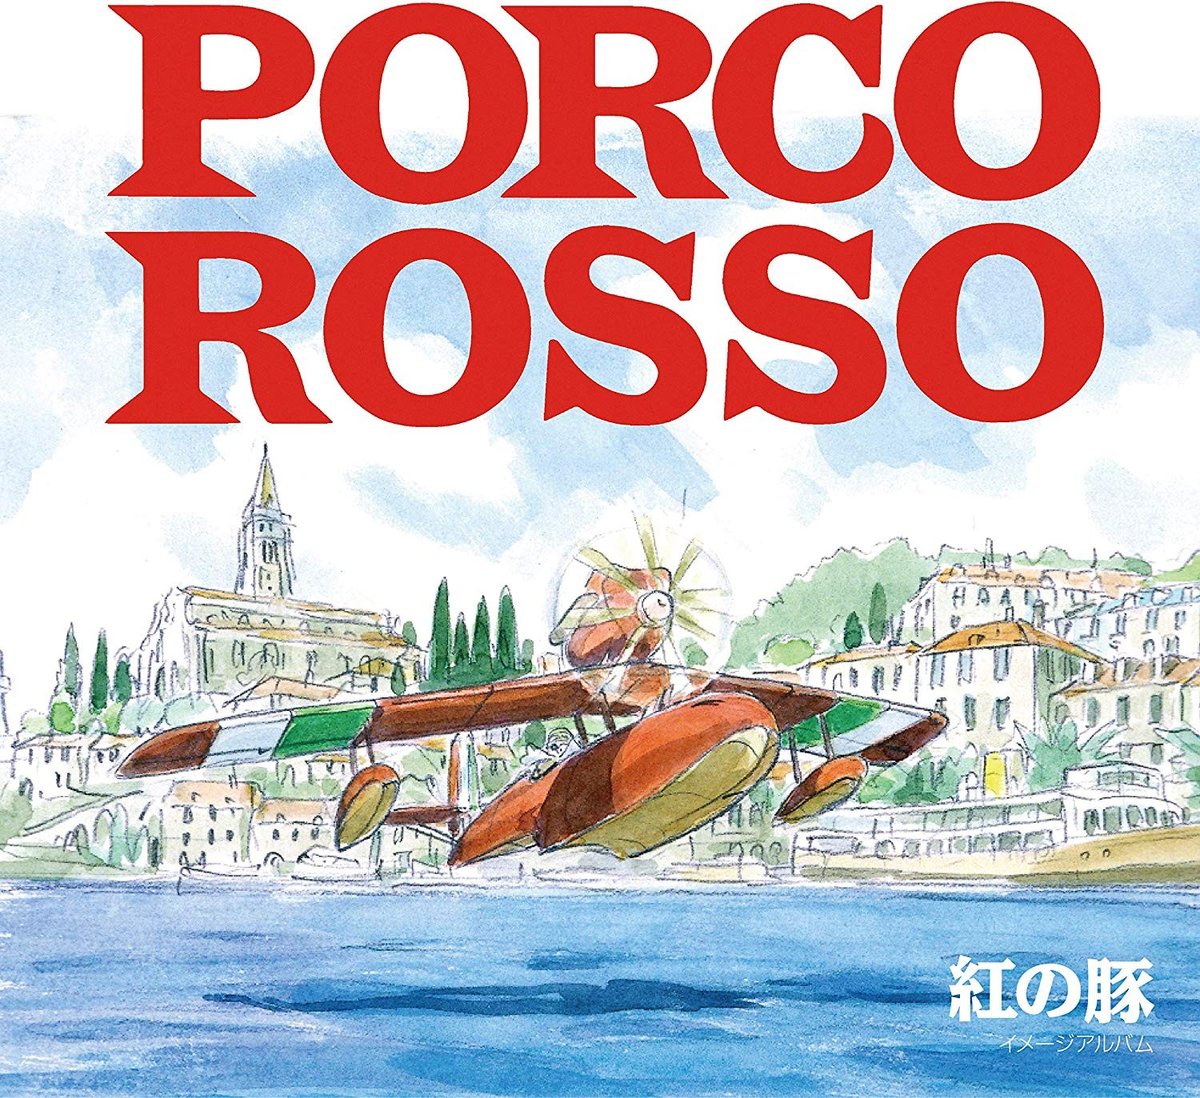 Hisaishi Joe - Porco Rosso - Image Album - Hisaishi Joe | Muzyka Sklep ...